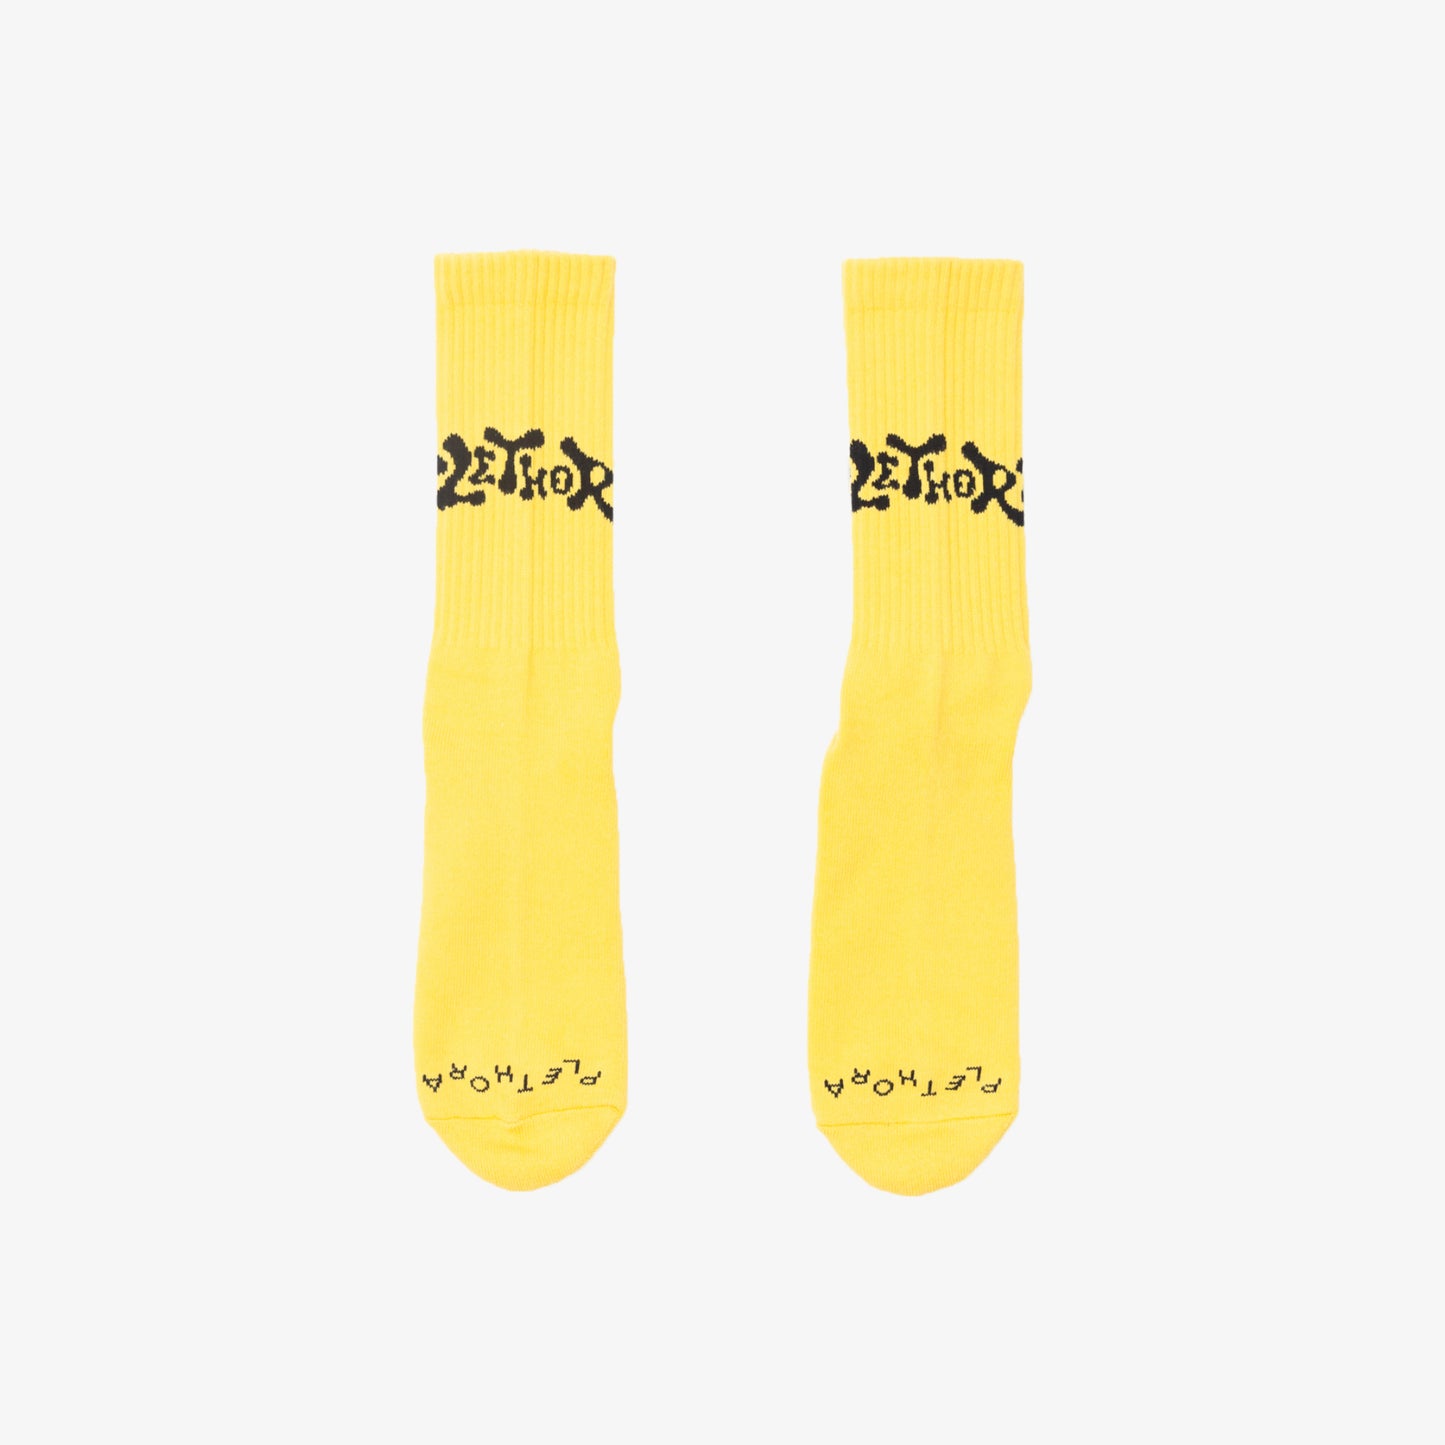 PLETHORA "Wave" Socks - Bumble Bee Yellow / Black